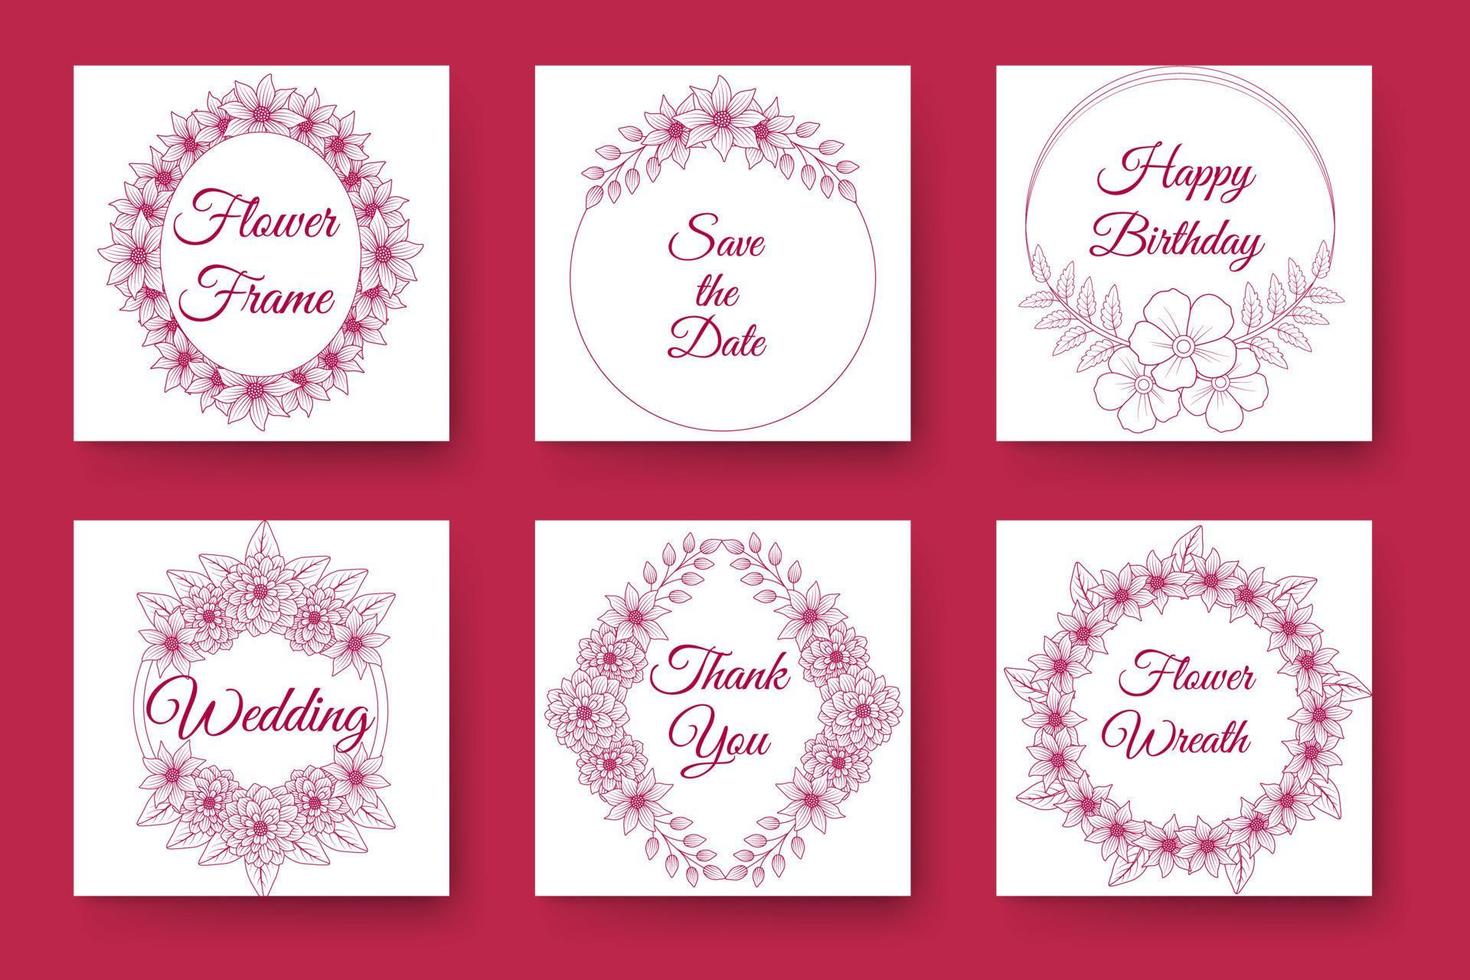 flower wreath design and floral frame design with elegant flowers border of wedding invitation card vector